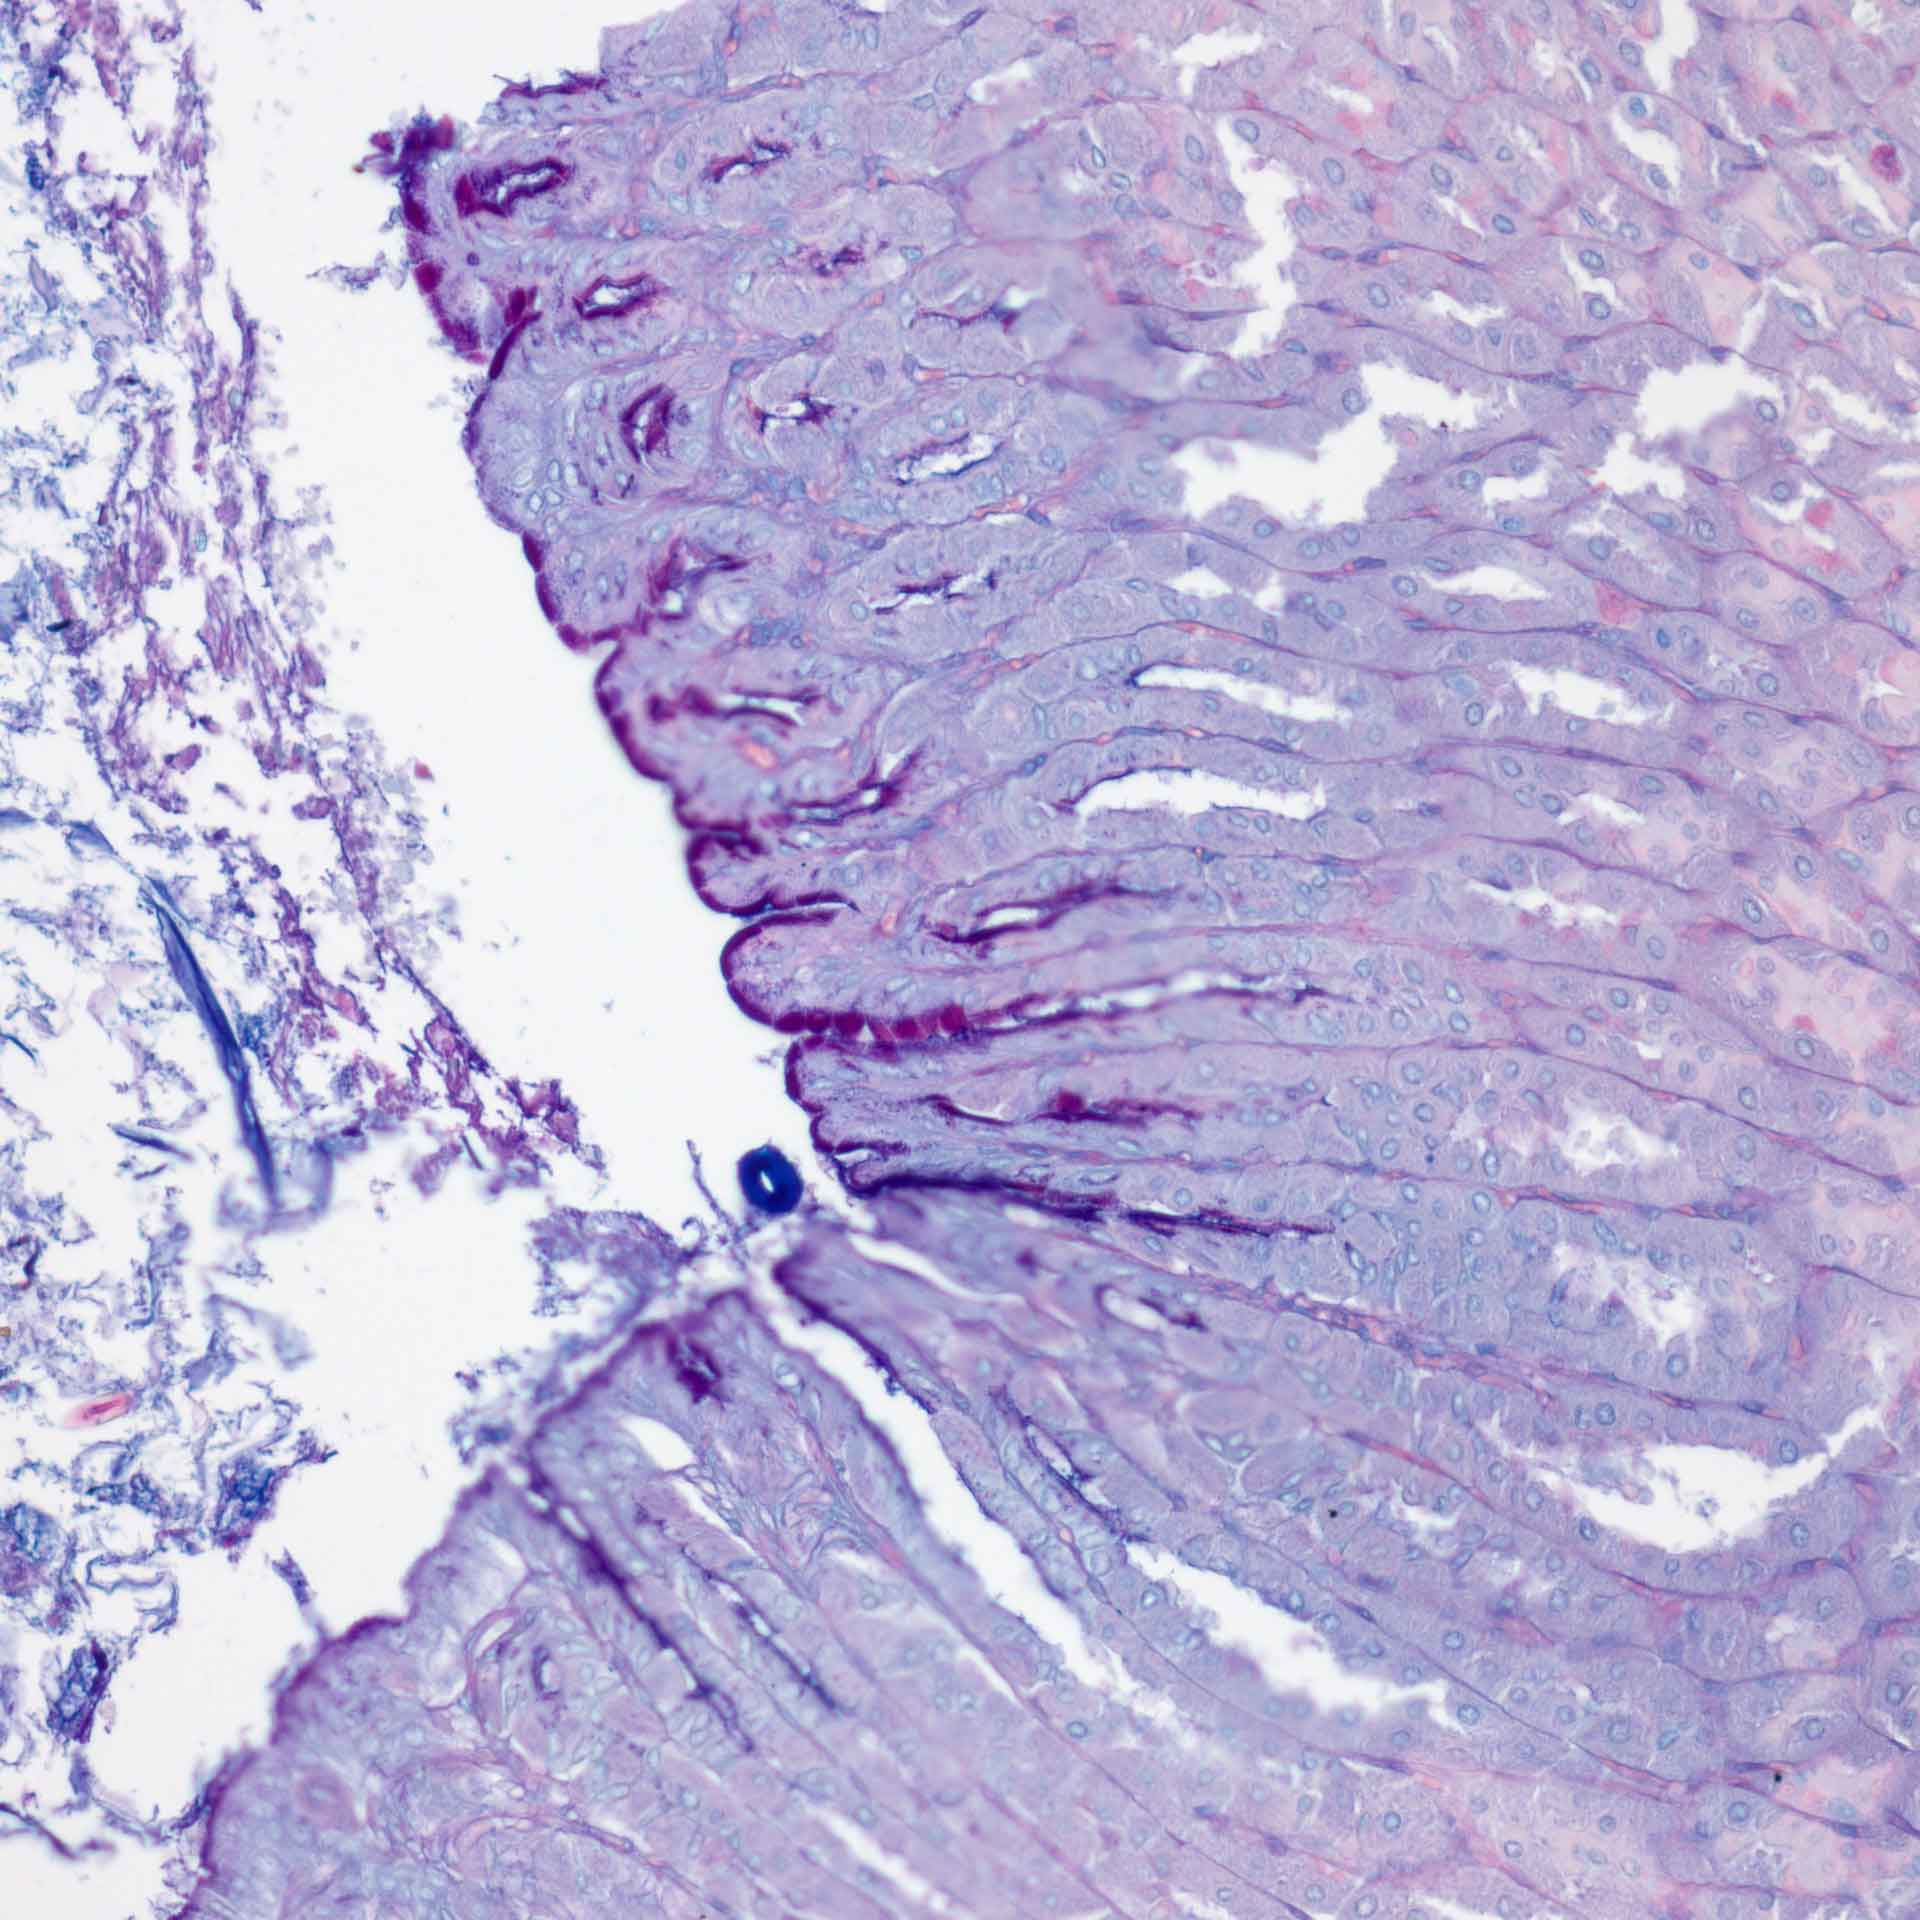 Cellules caliciformes intestinales de souris